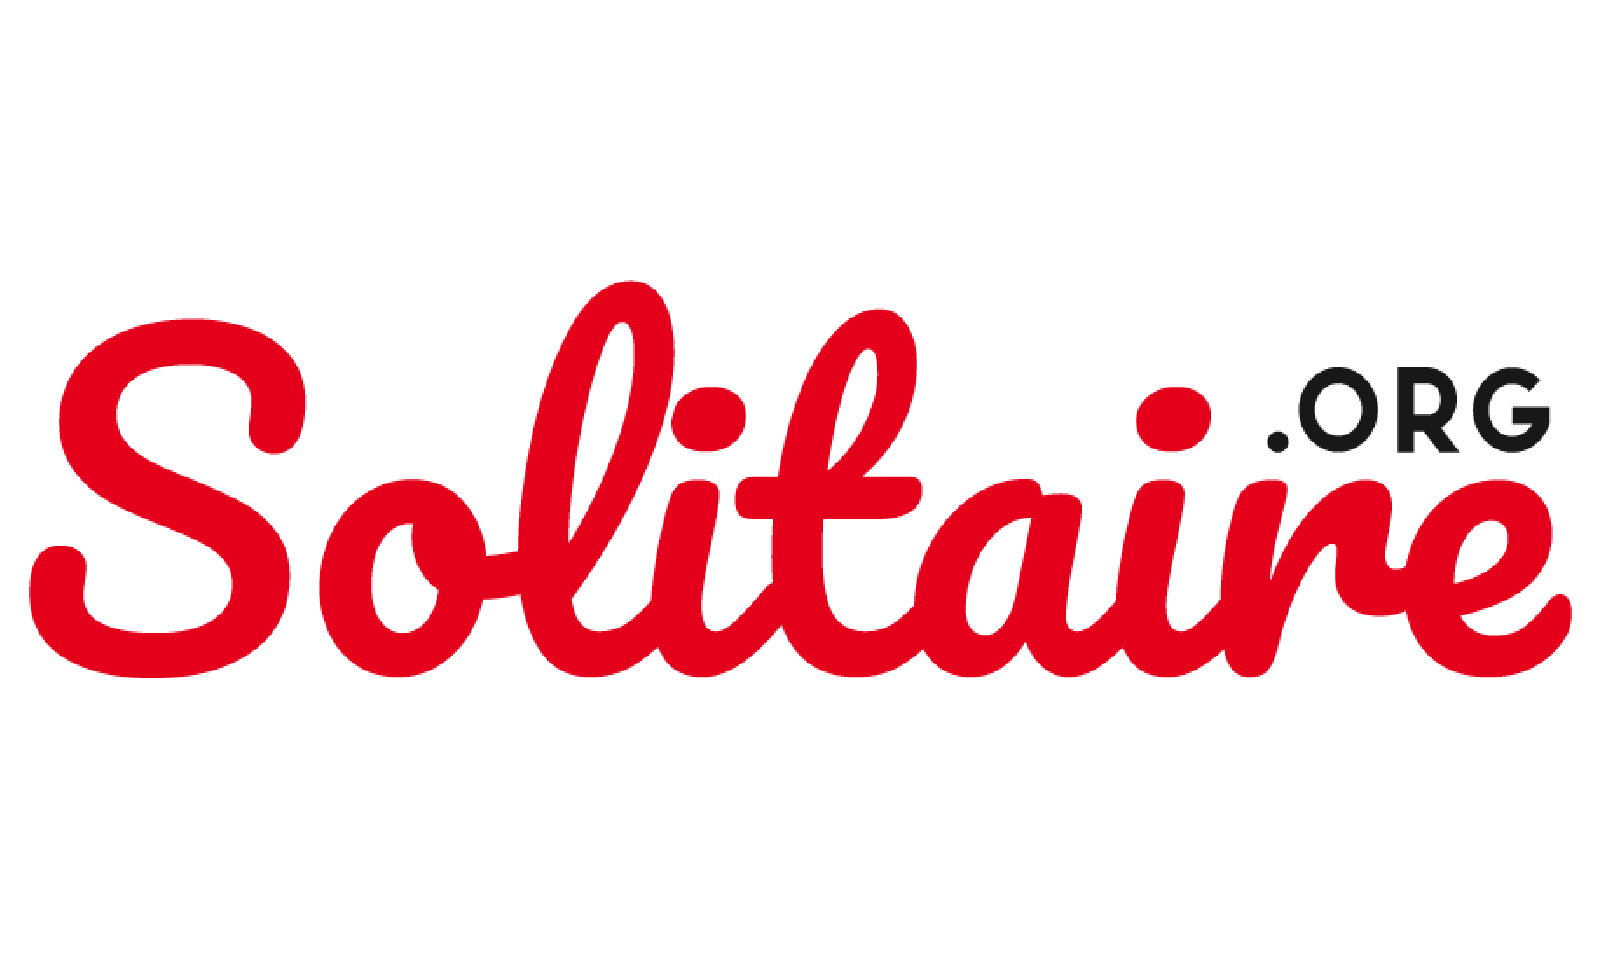 solitaire-web-app.com Competitors - Top Sites Like solitaire-web-app.com